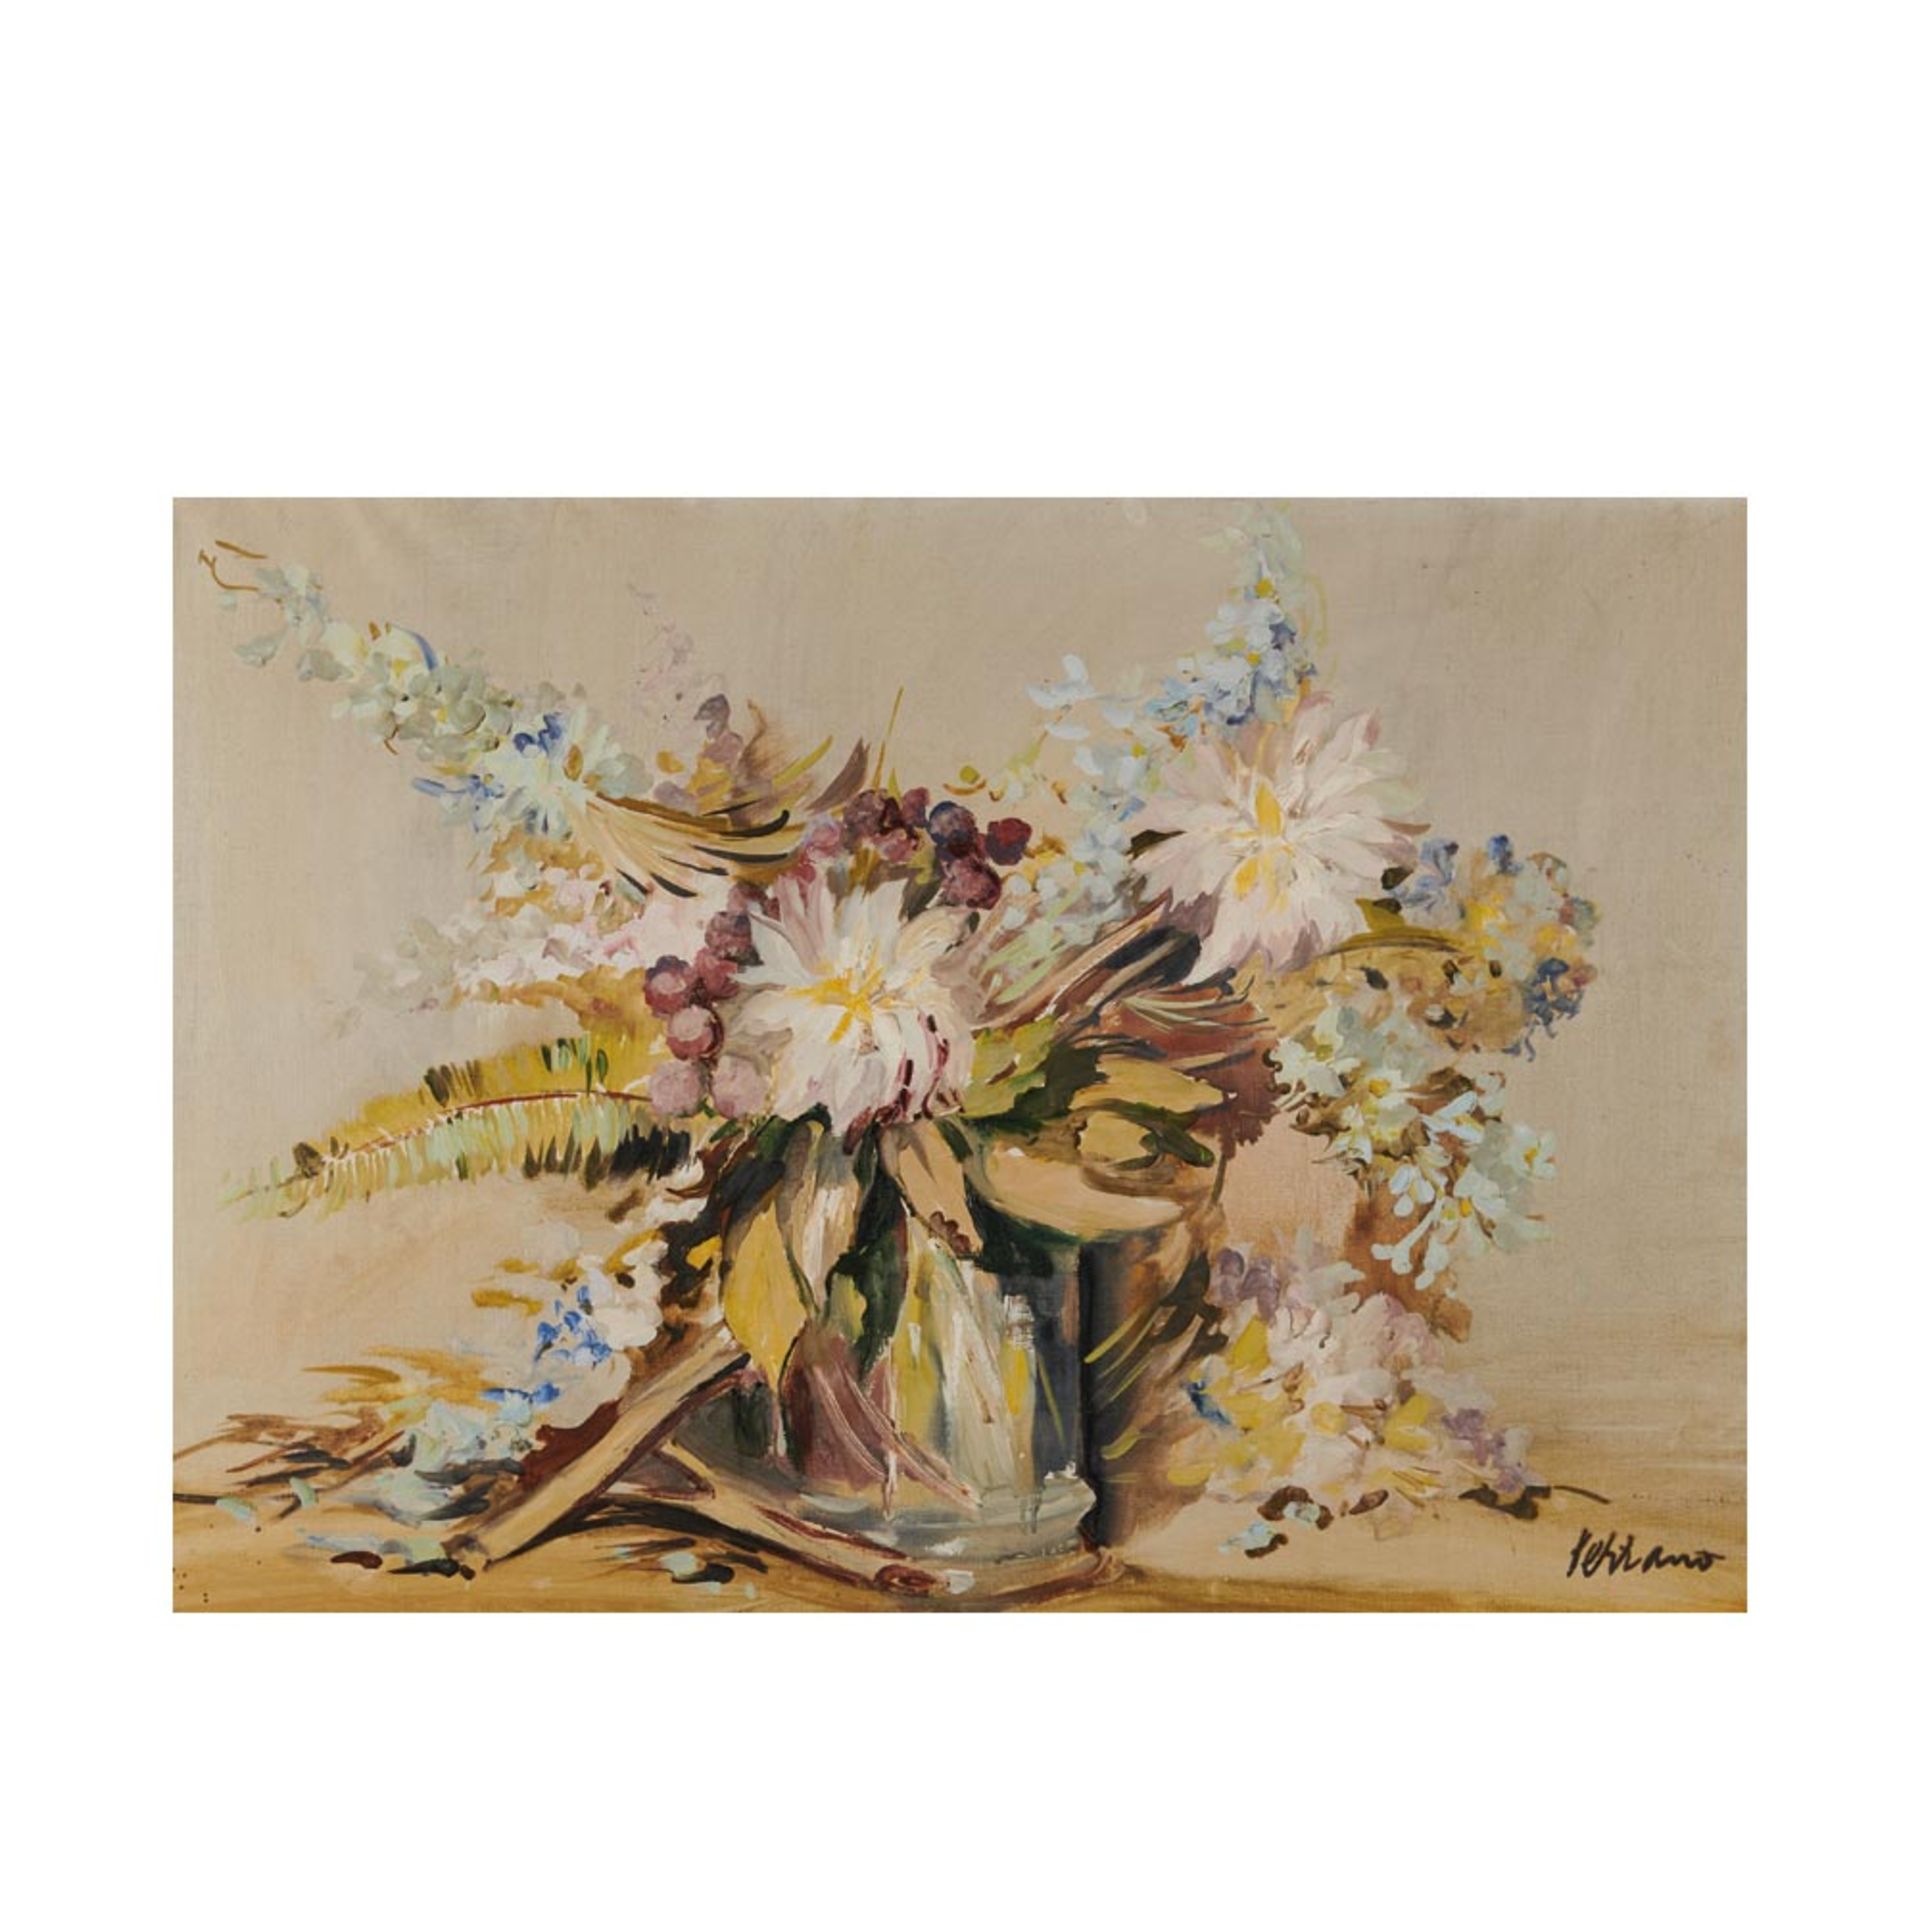 Josep Miquel Serrano (Barcelona, 1912-1982) Jarrón con flores. Óleo sobre tela. Firmado. 65 x 93